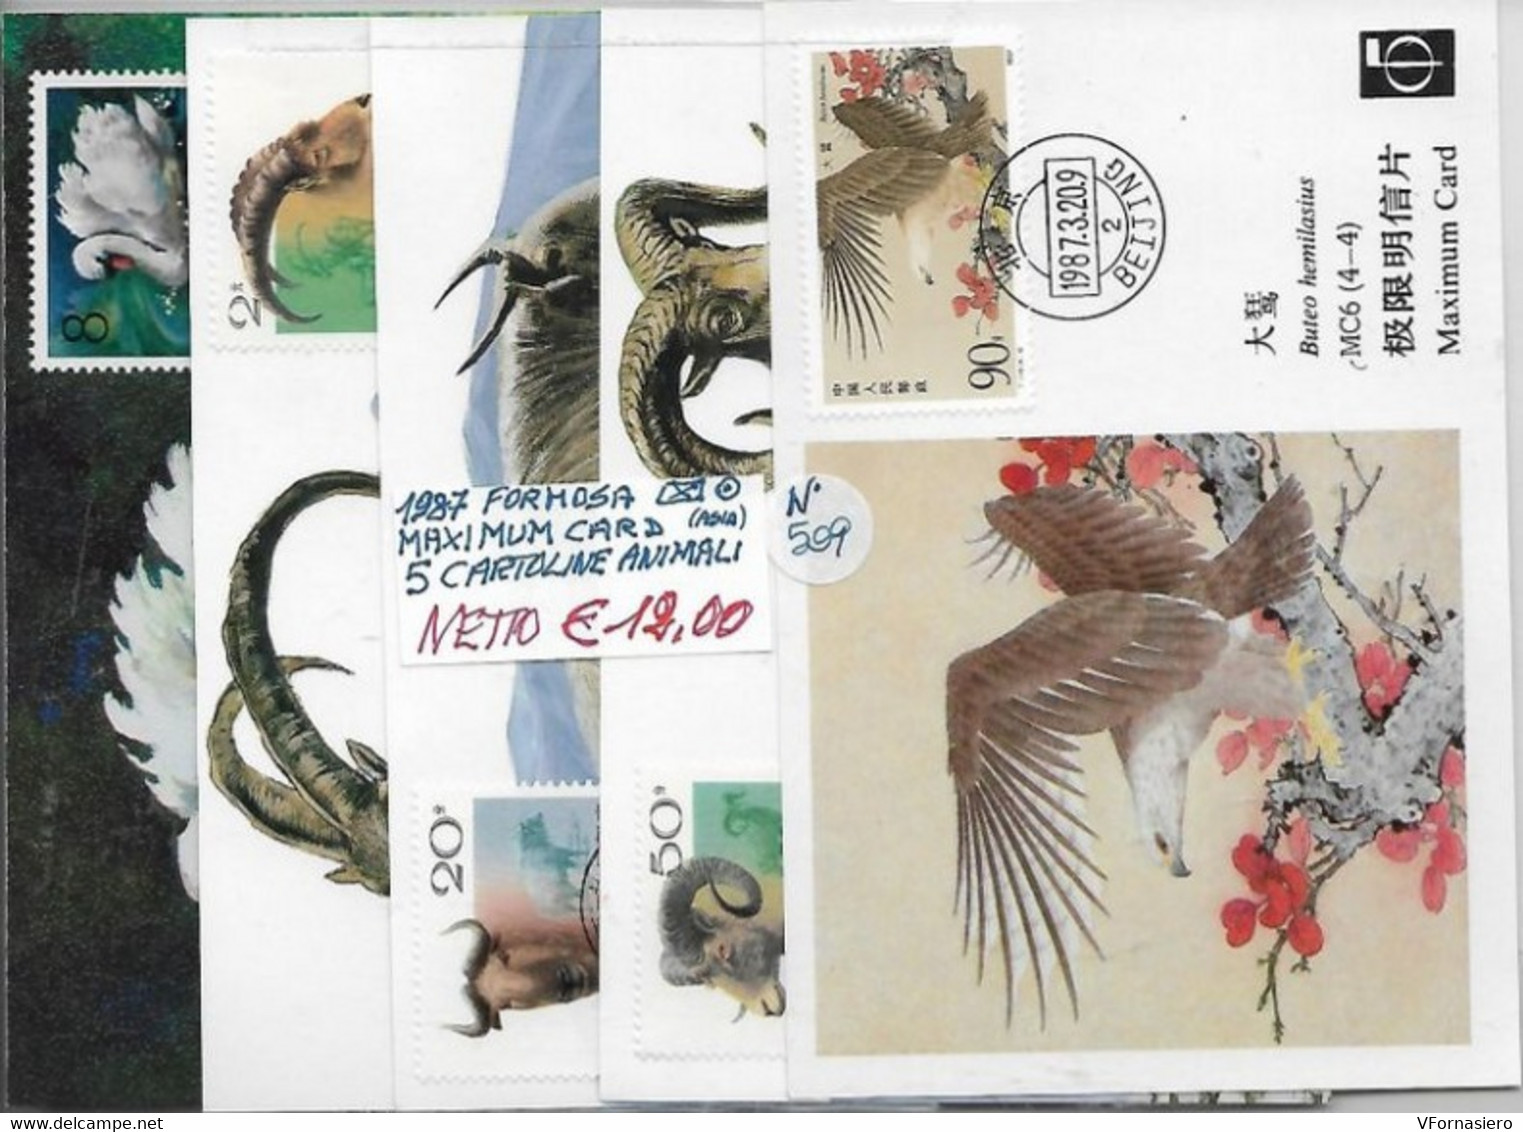 FORMOSA ʘ 1987, MAXIMUM CARD, 5 CARTOLINE ANIMALI - Formosa